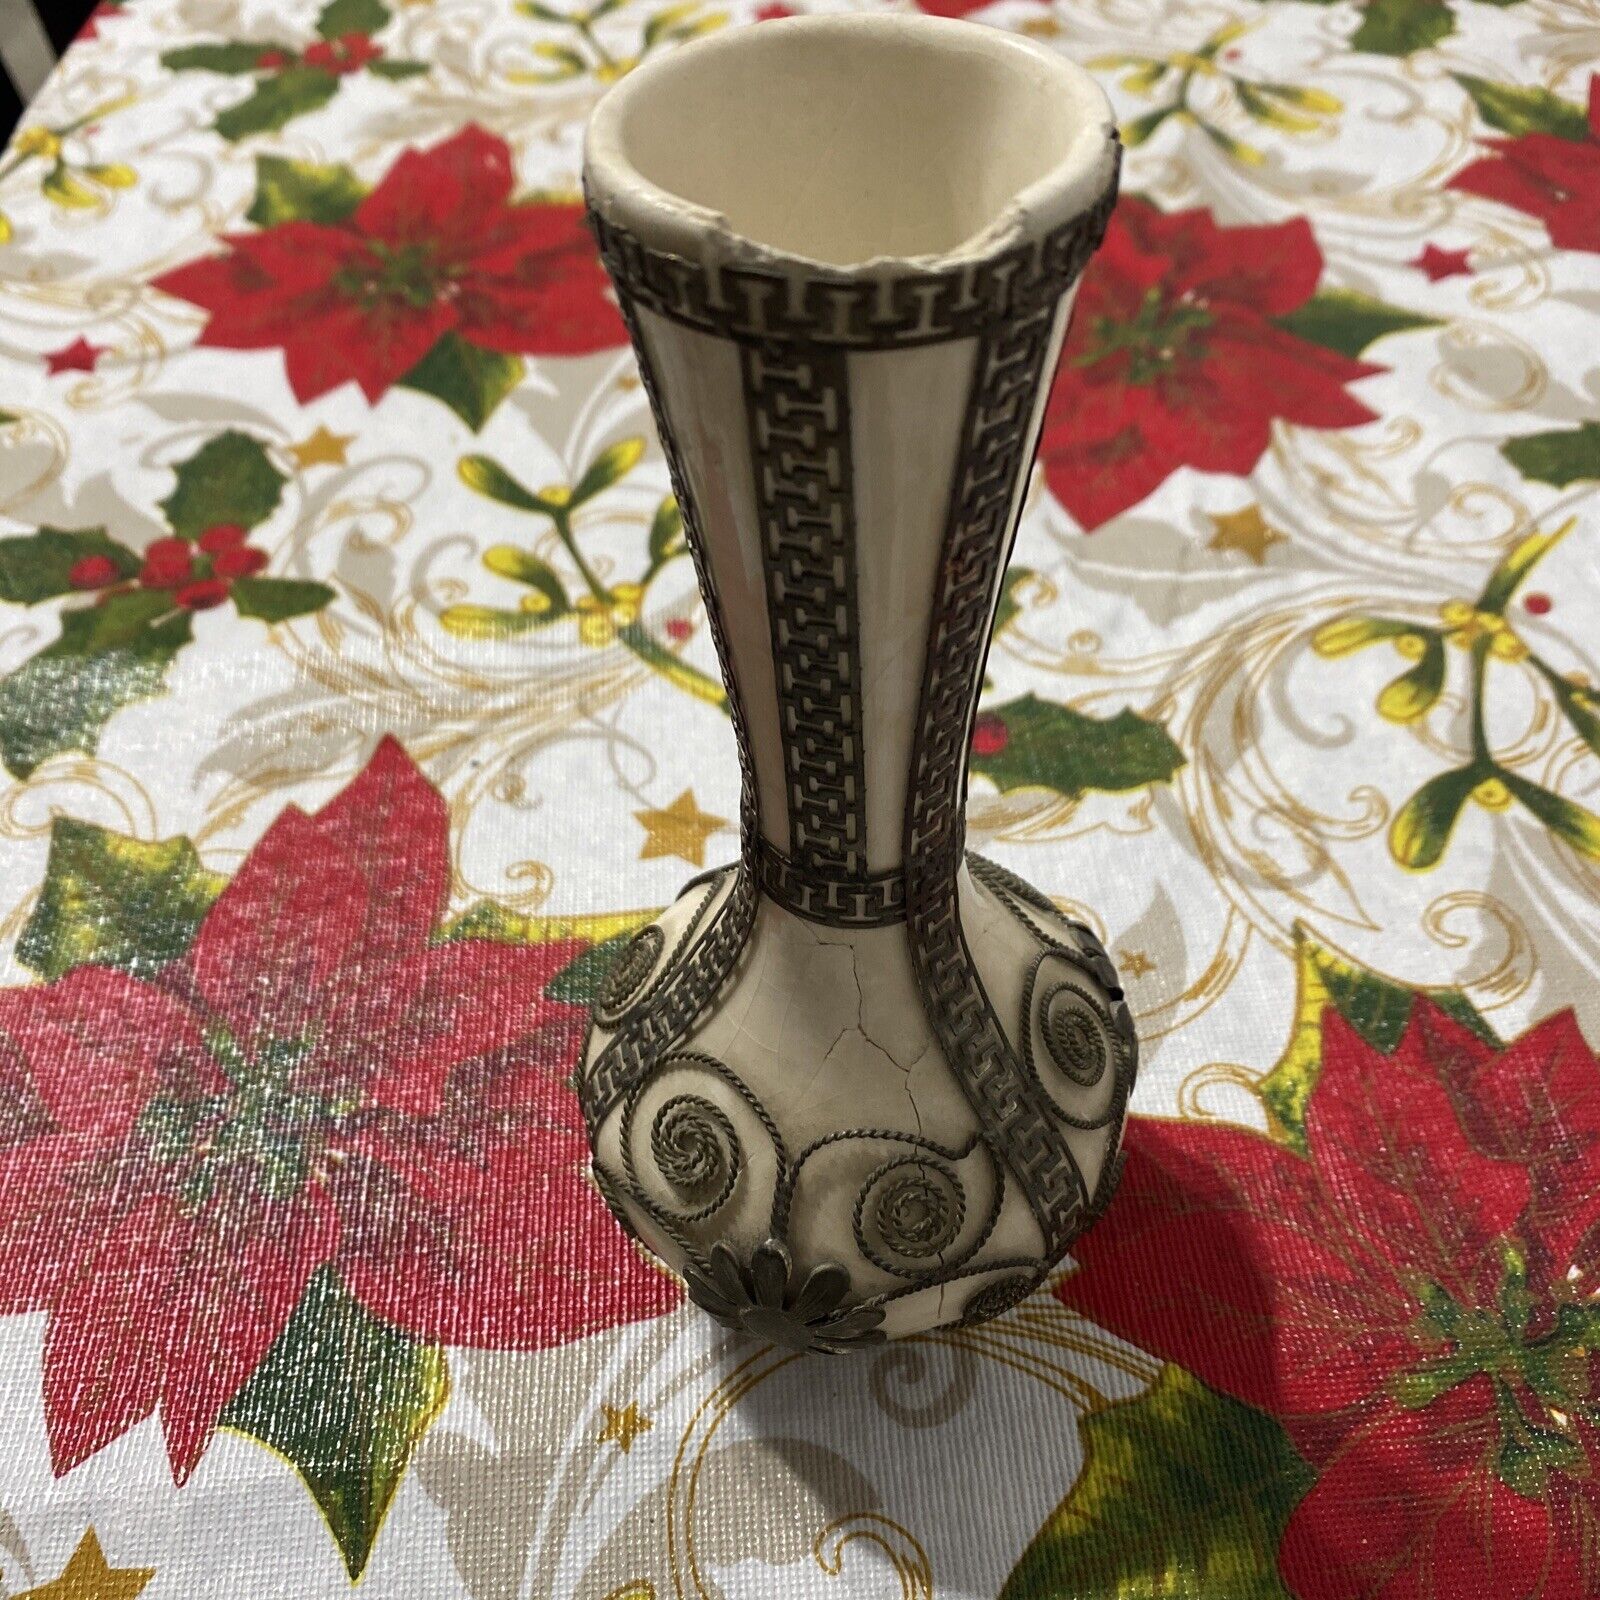 Heavily Cracked & Crazed Vase Porcelain W/ Metal Trim 6 3/4”Tall - Rare - Old 